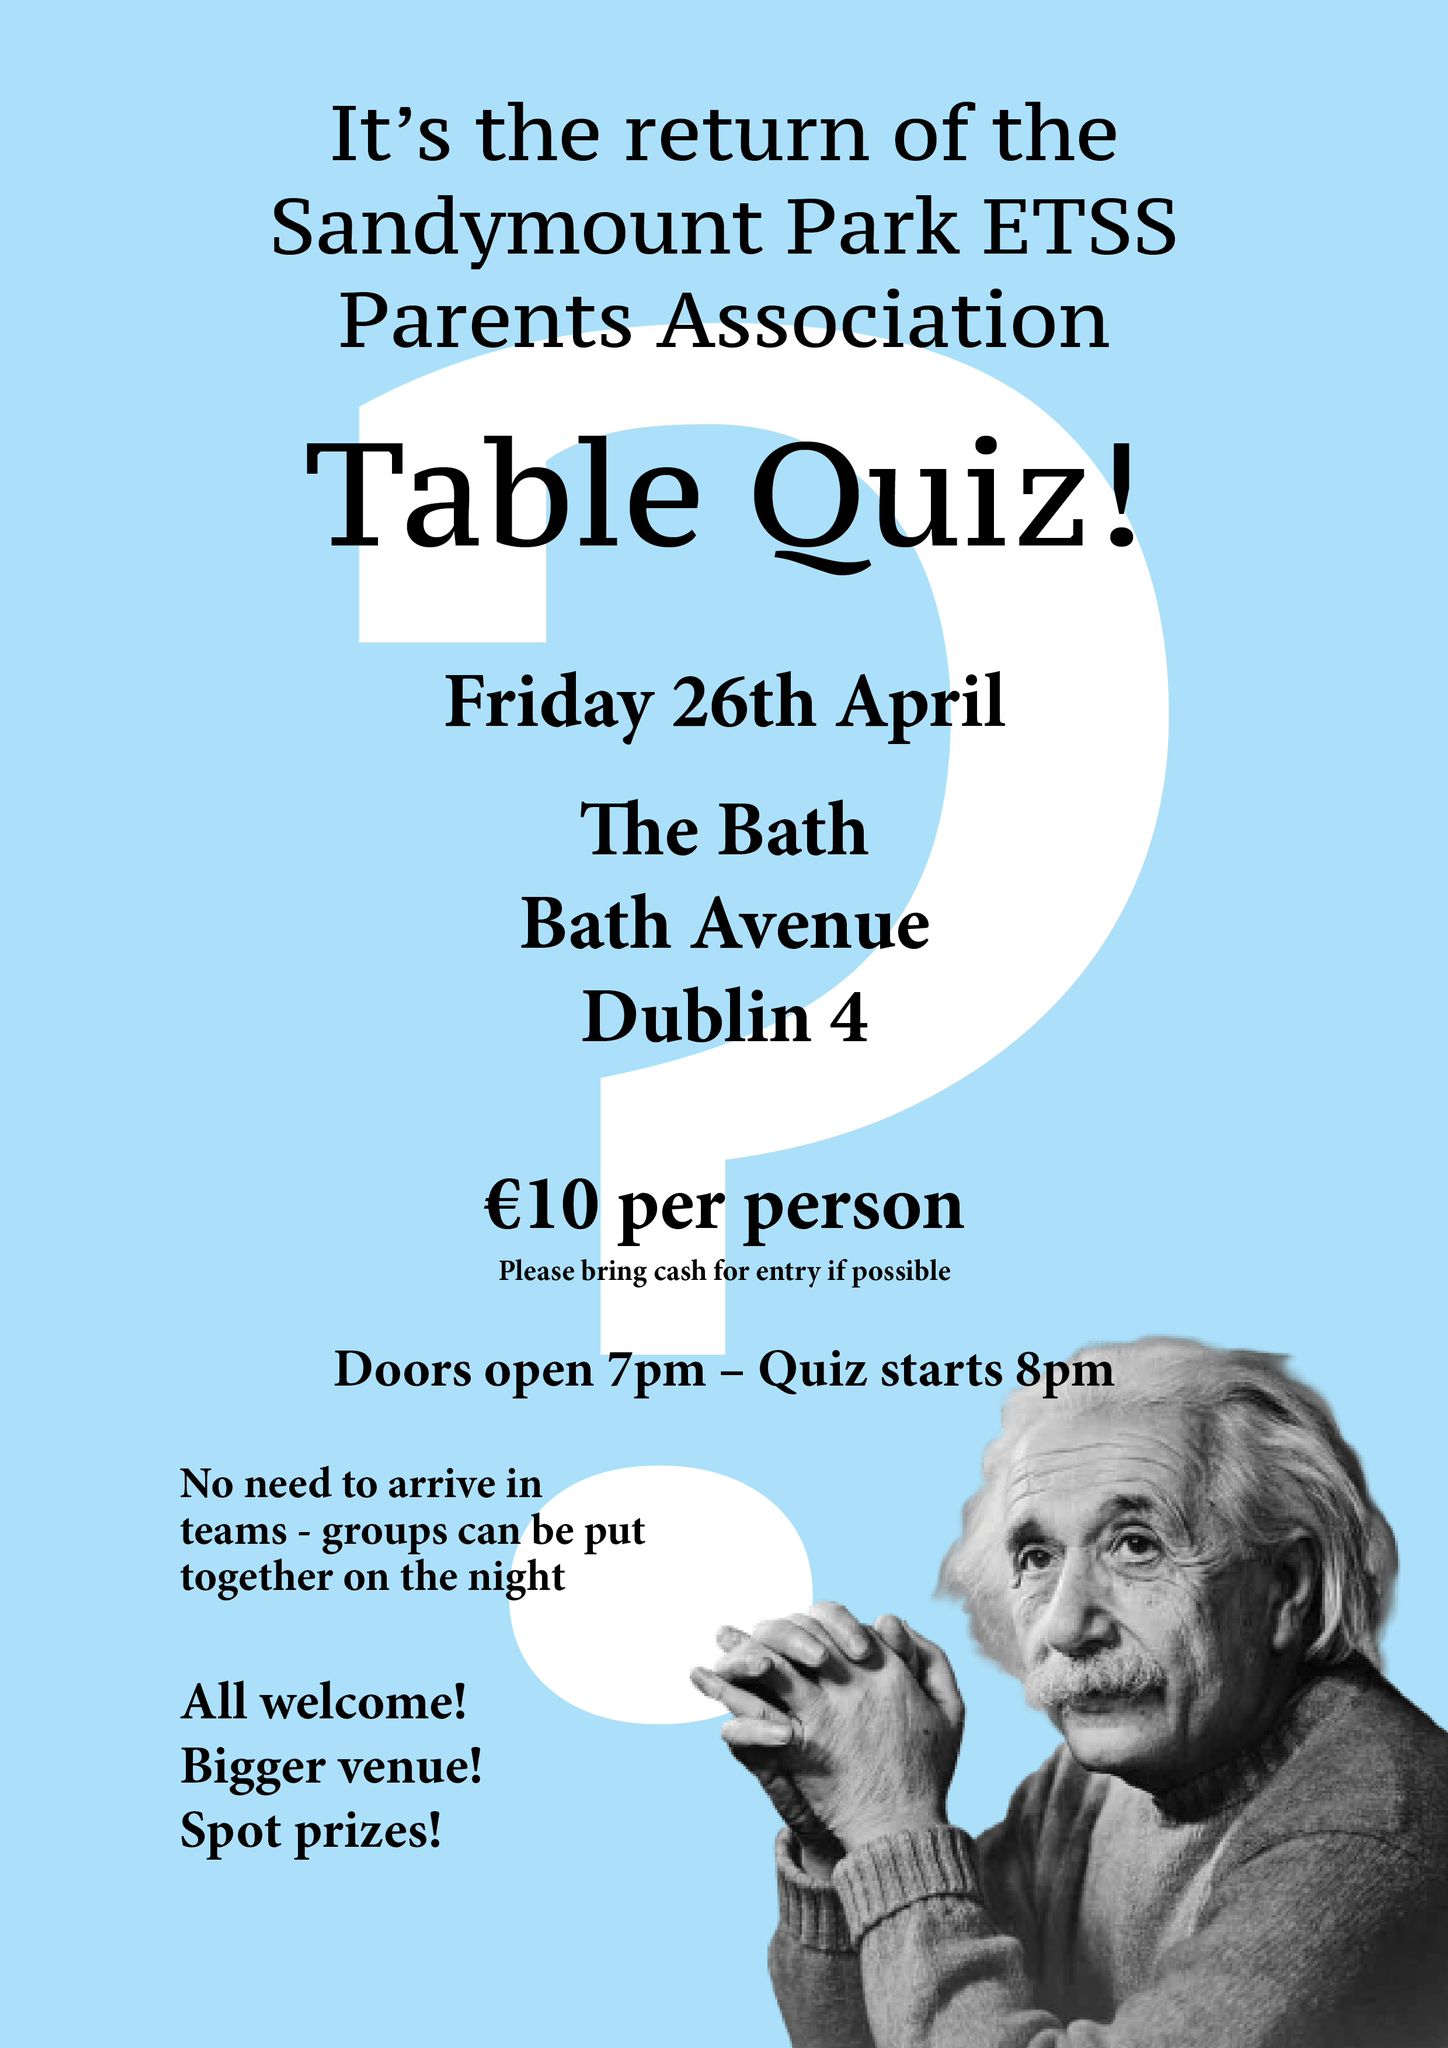 Parent Association Table Quiz Friday 26th 7pm